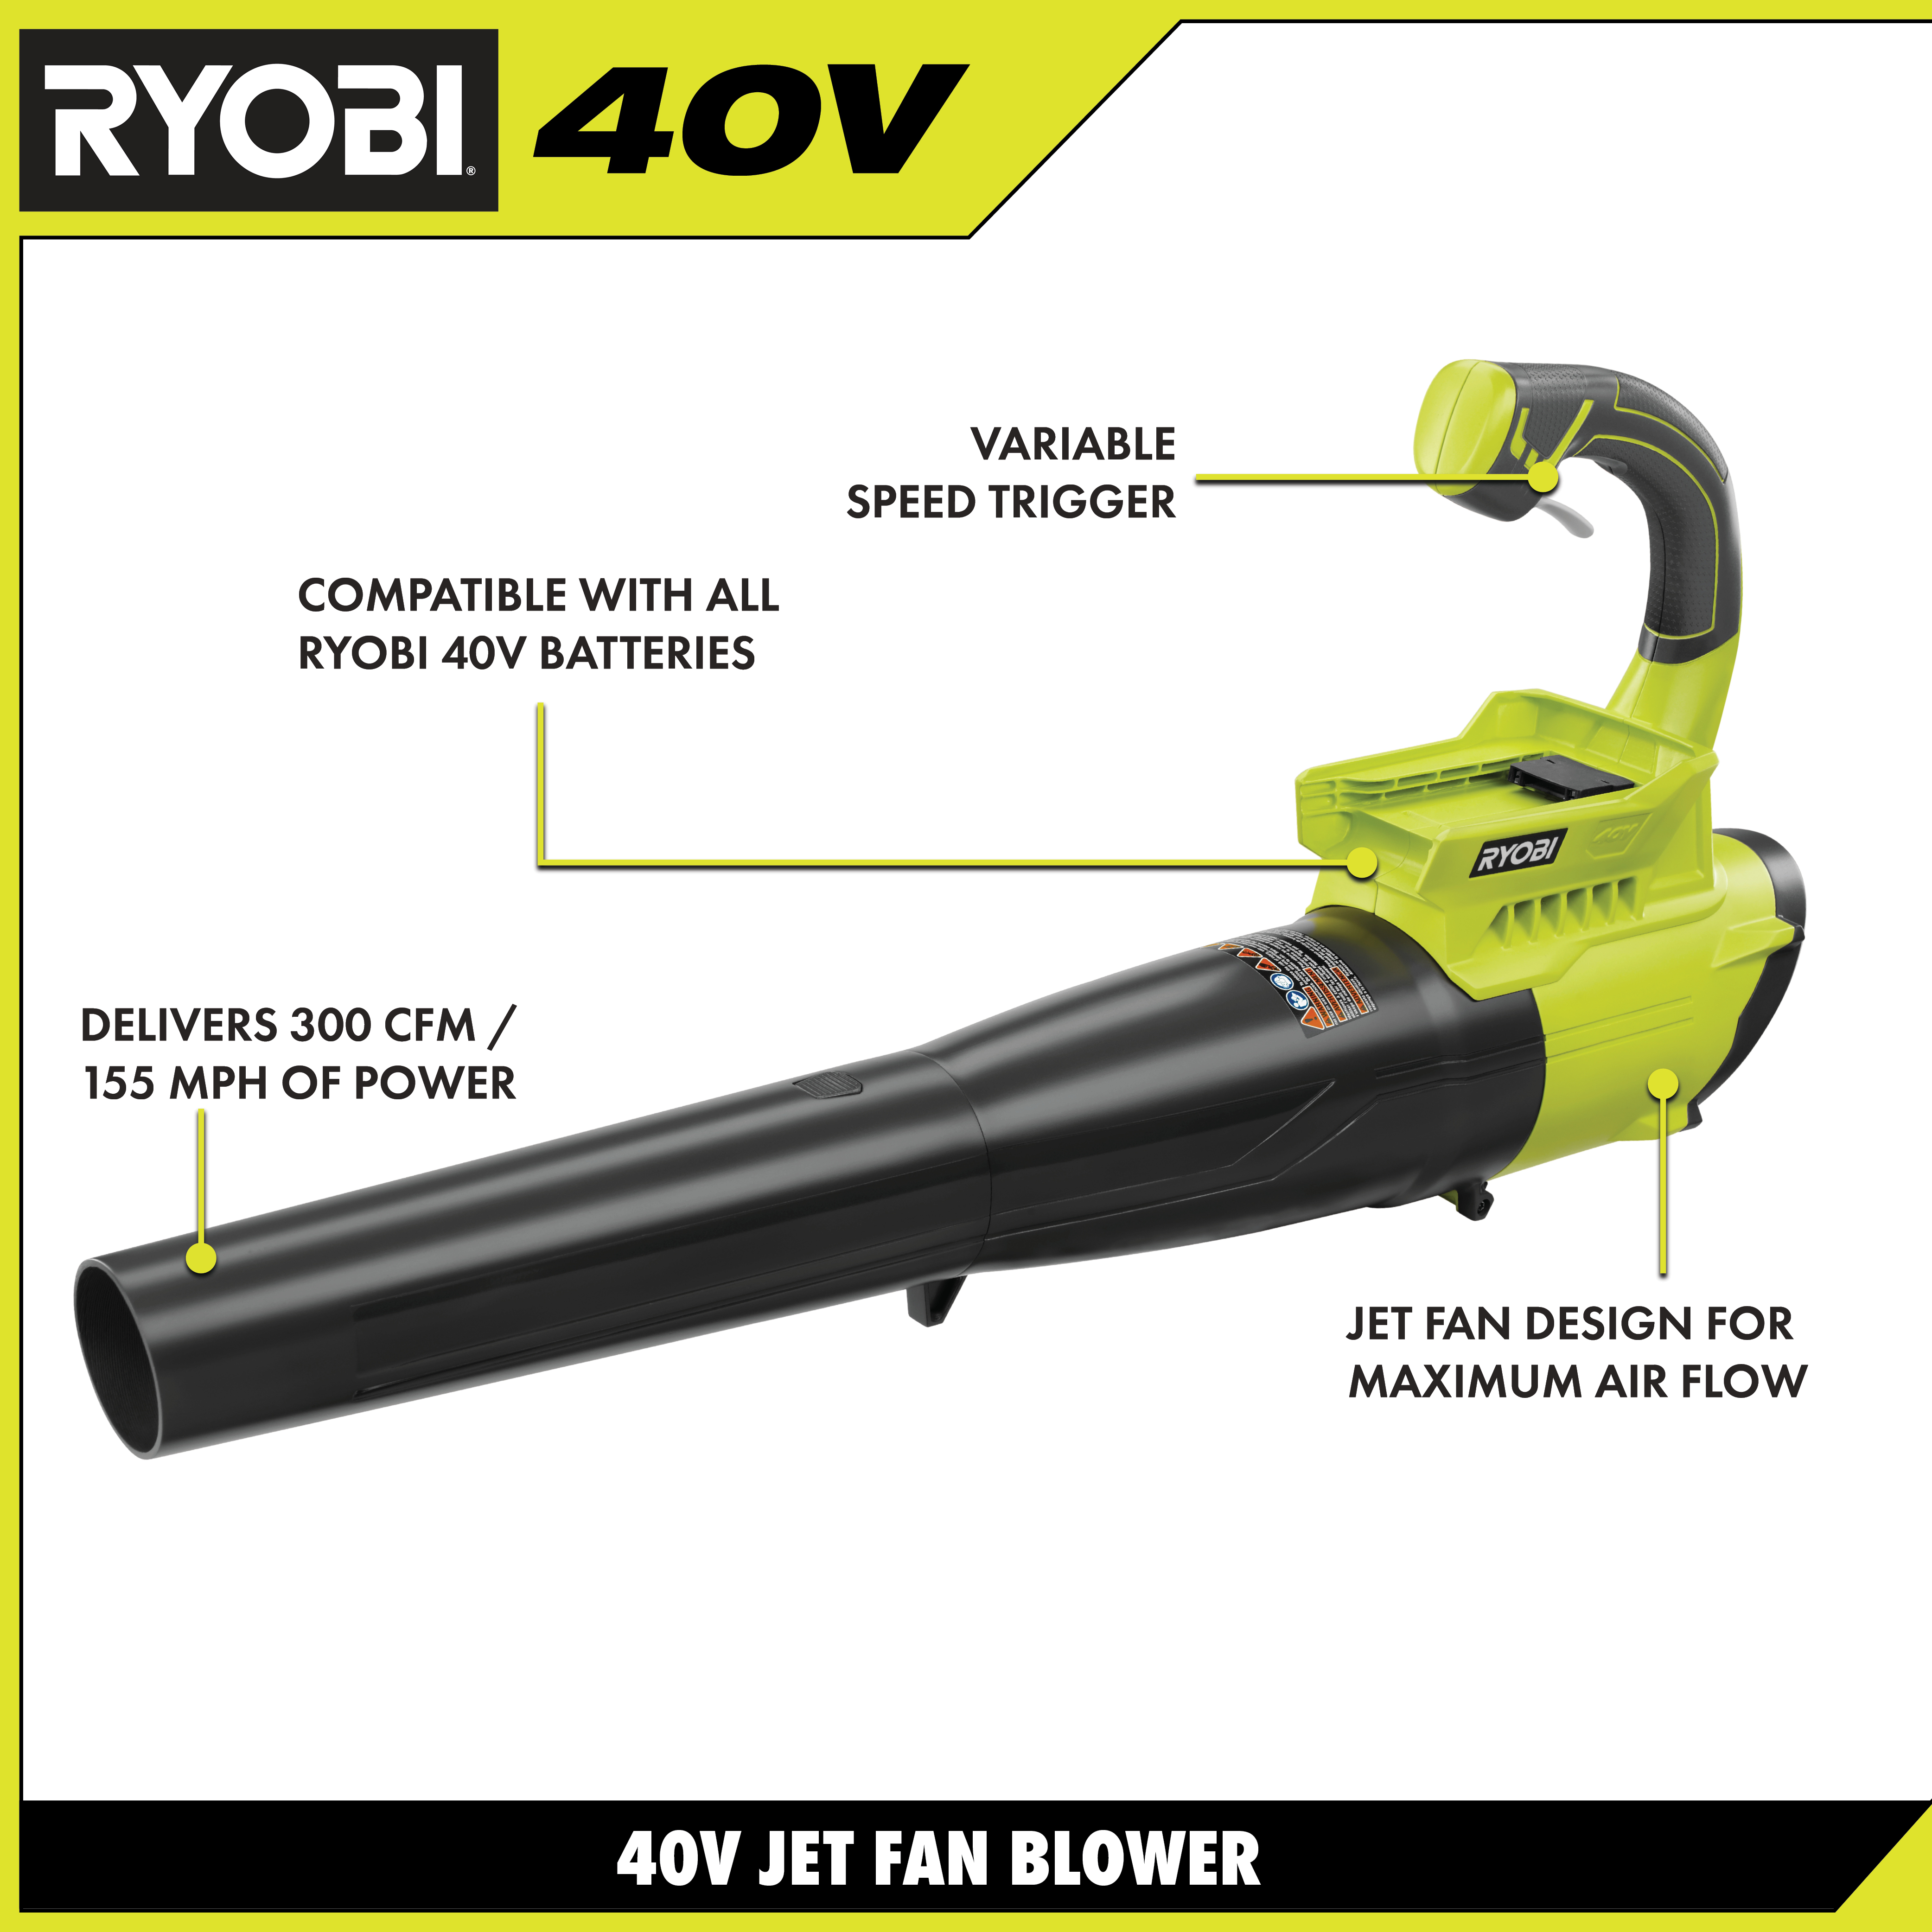 40V 525 CFM JET FAN BLOWER - RYOBI Tools